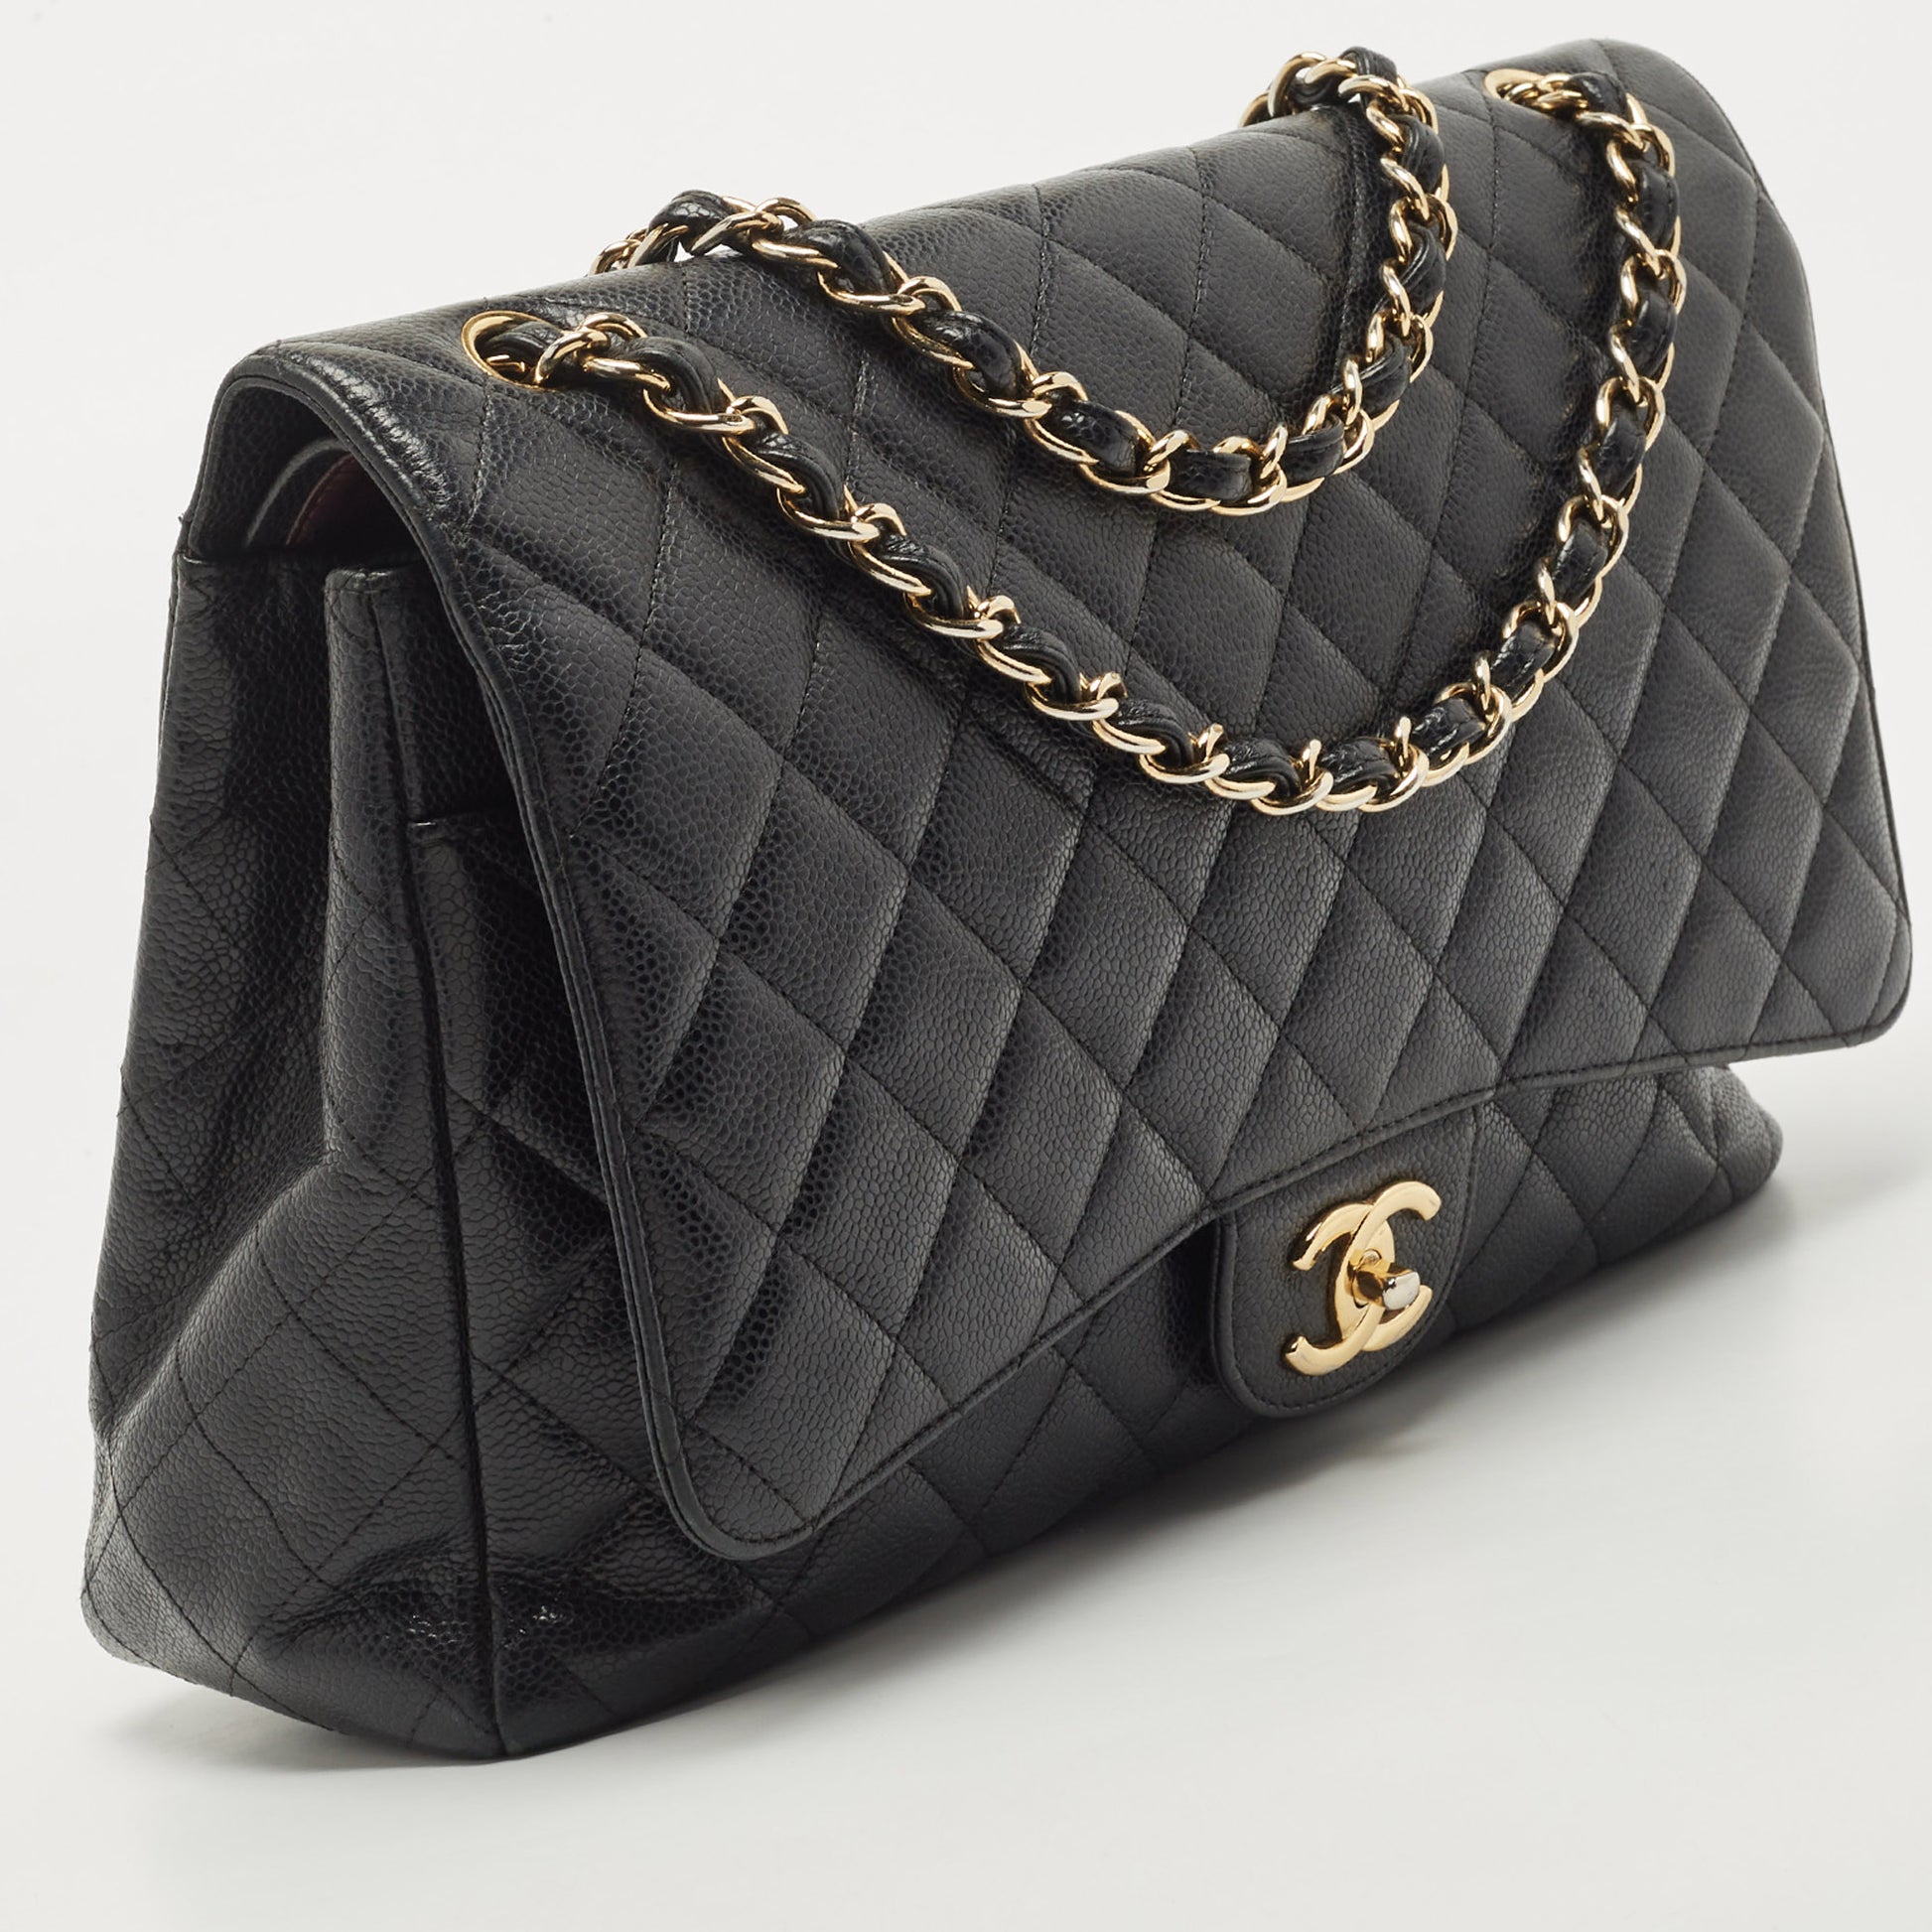 CHANEL Black Caviar Leather Maxi Classic Double Flap Bag